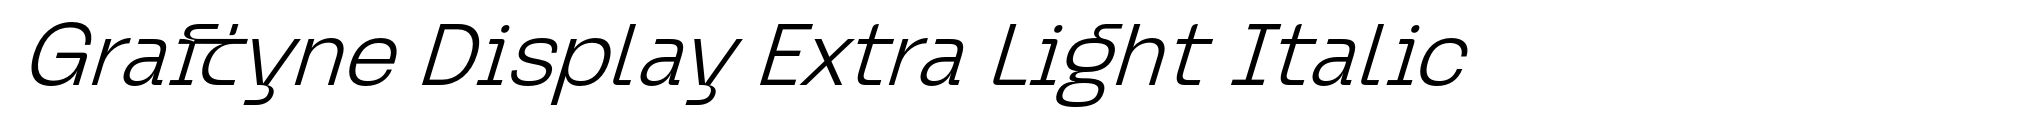 Graftyne Display Extra Light Italic image